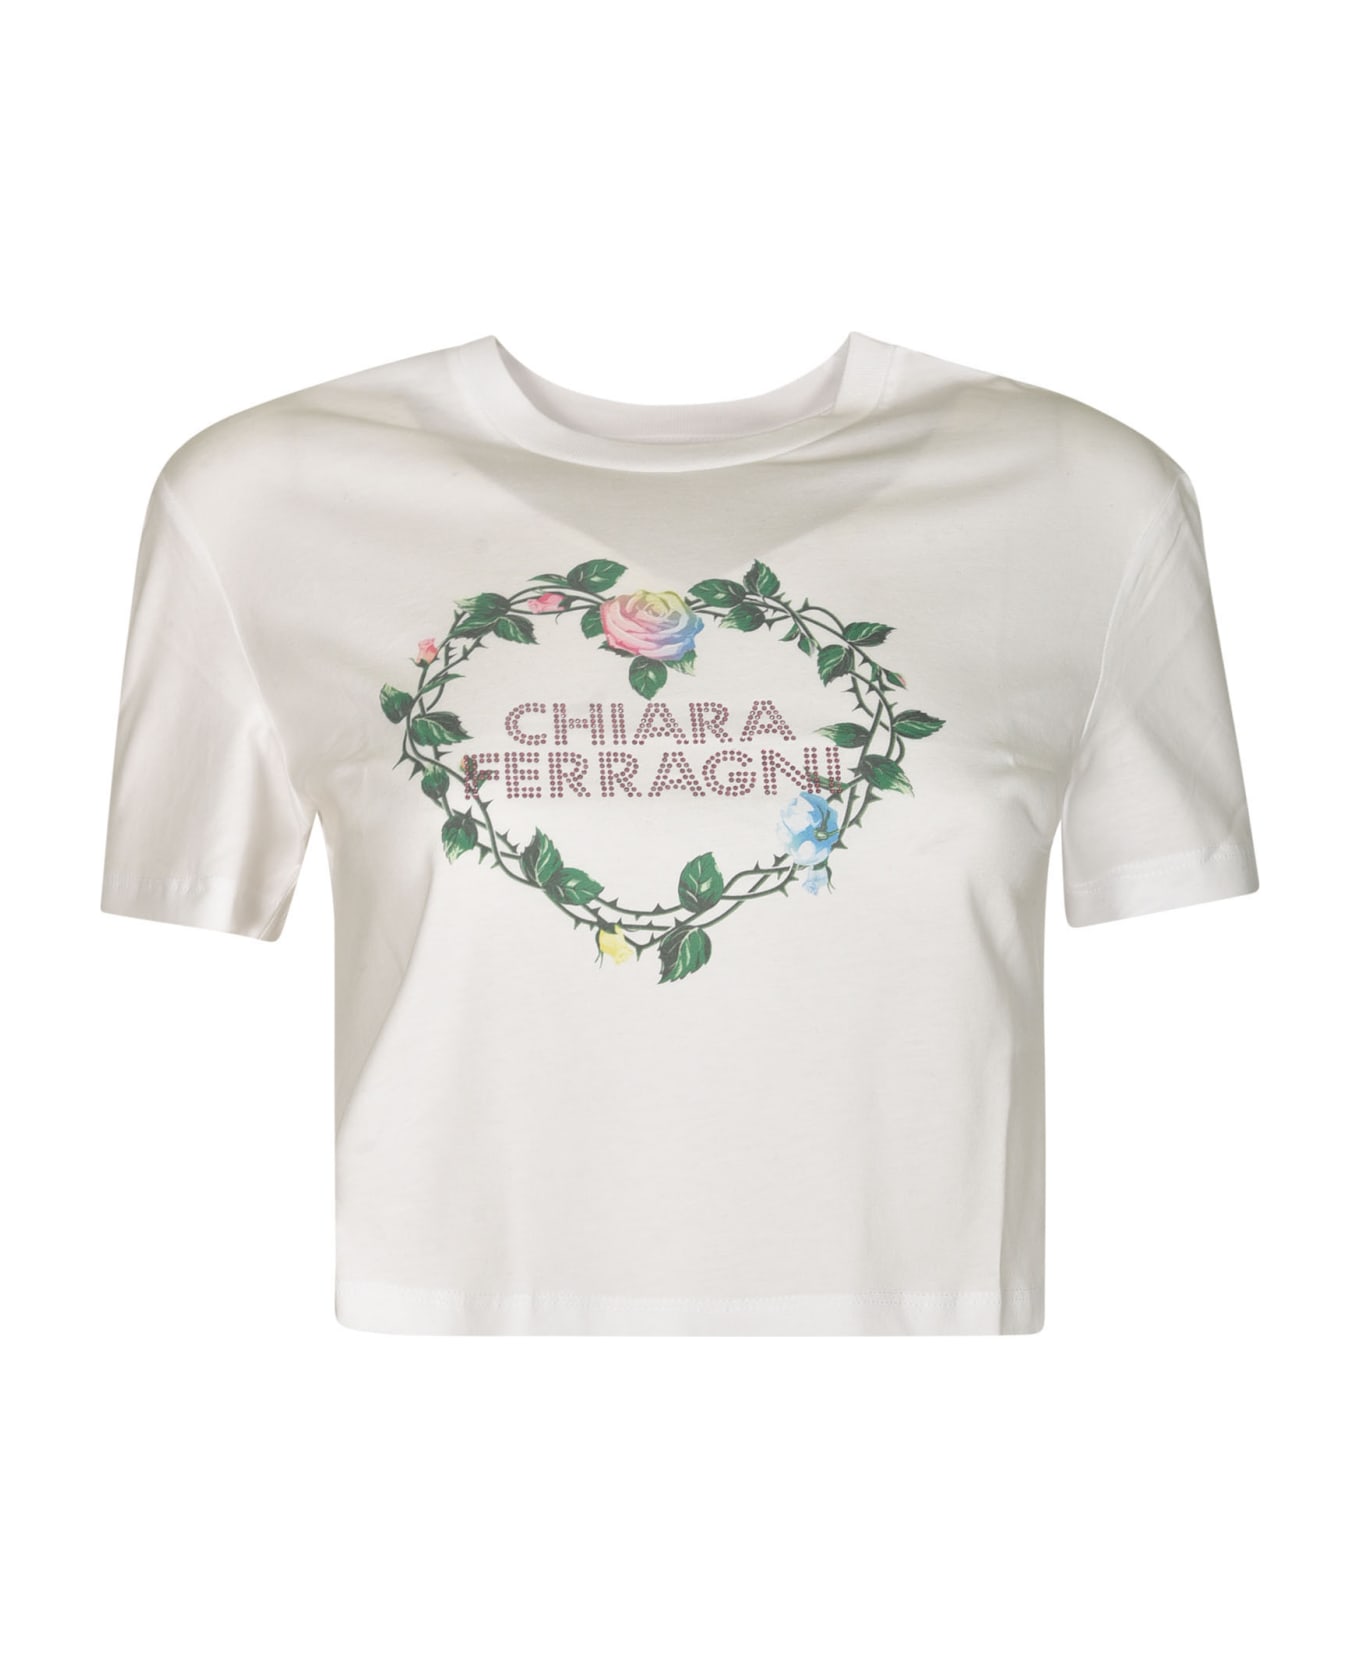 Chiara Ferragni Logo Printed T-shirt Tシャツ